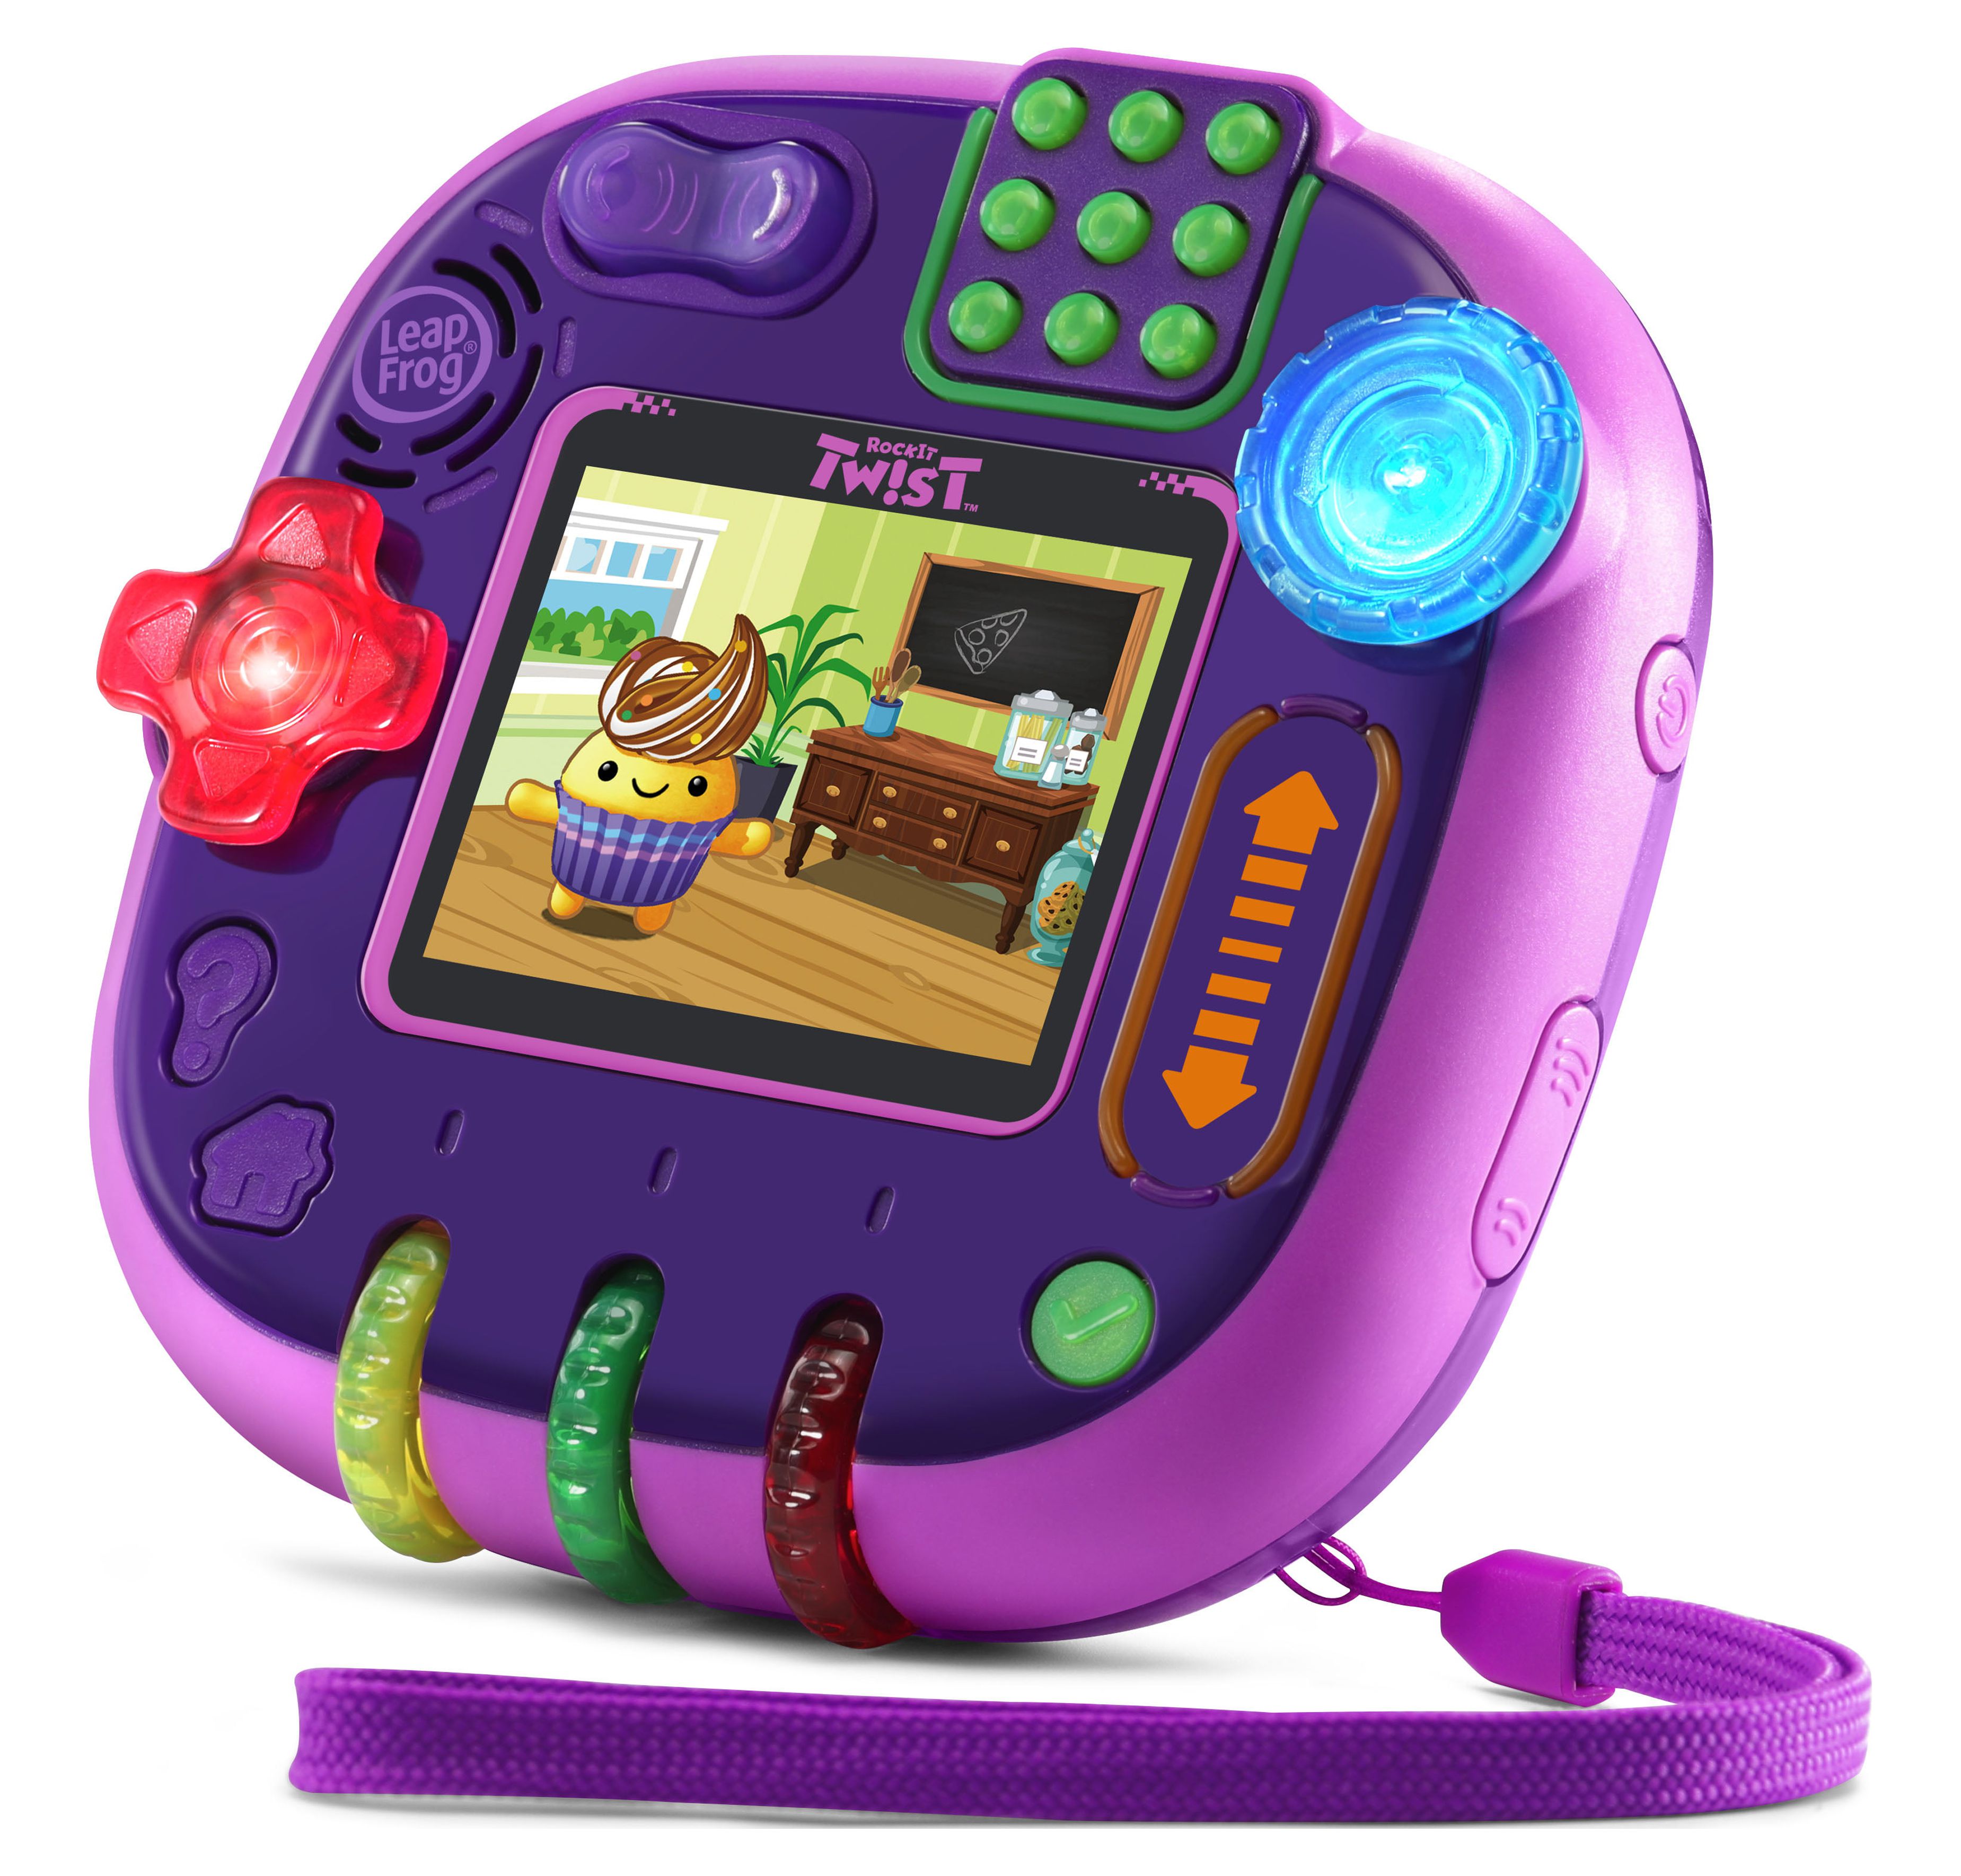 LeapFrog RockIt Twist Handheld Learning Game System, Purple - image 4 of 18